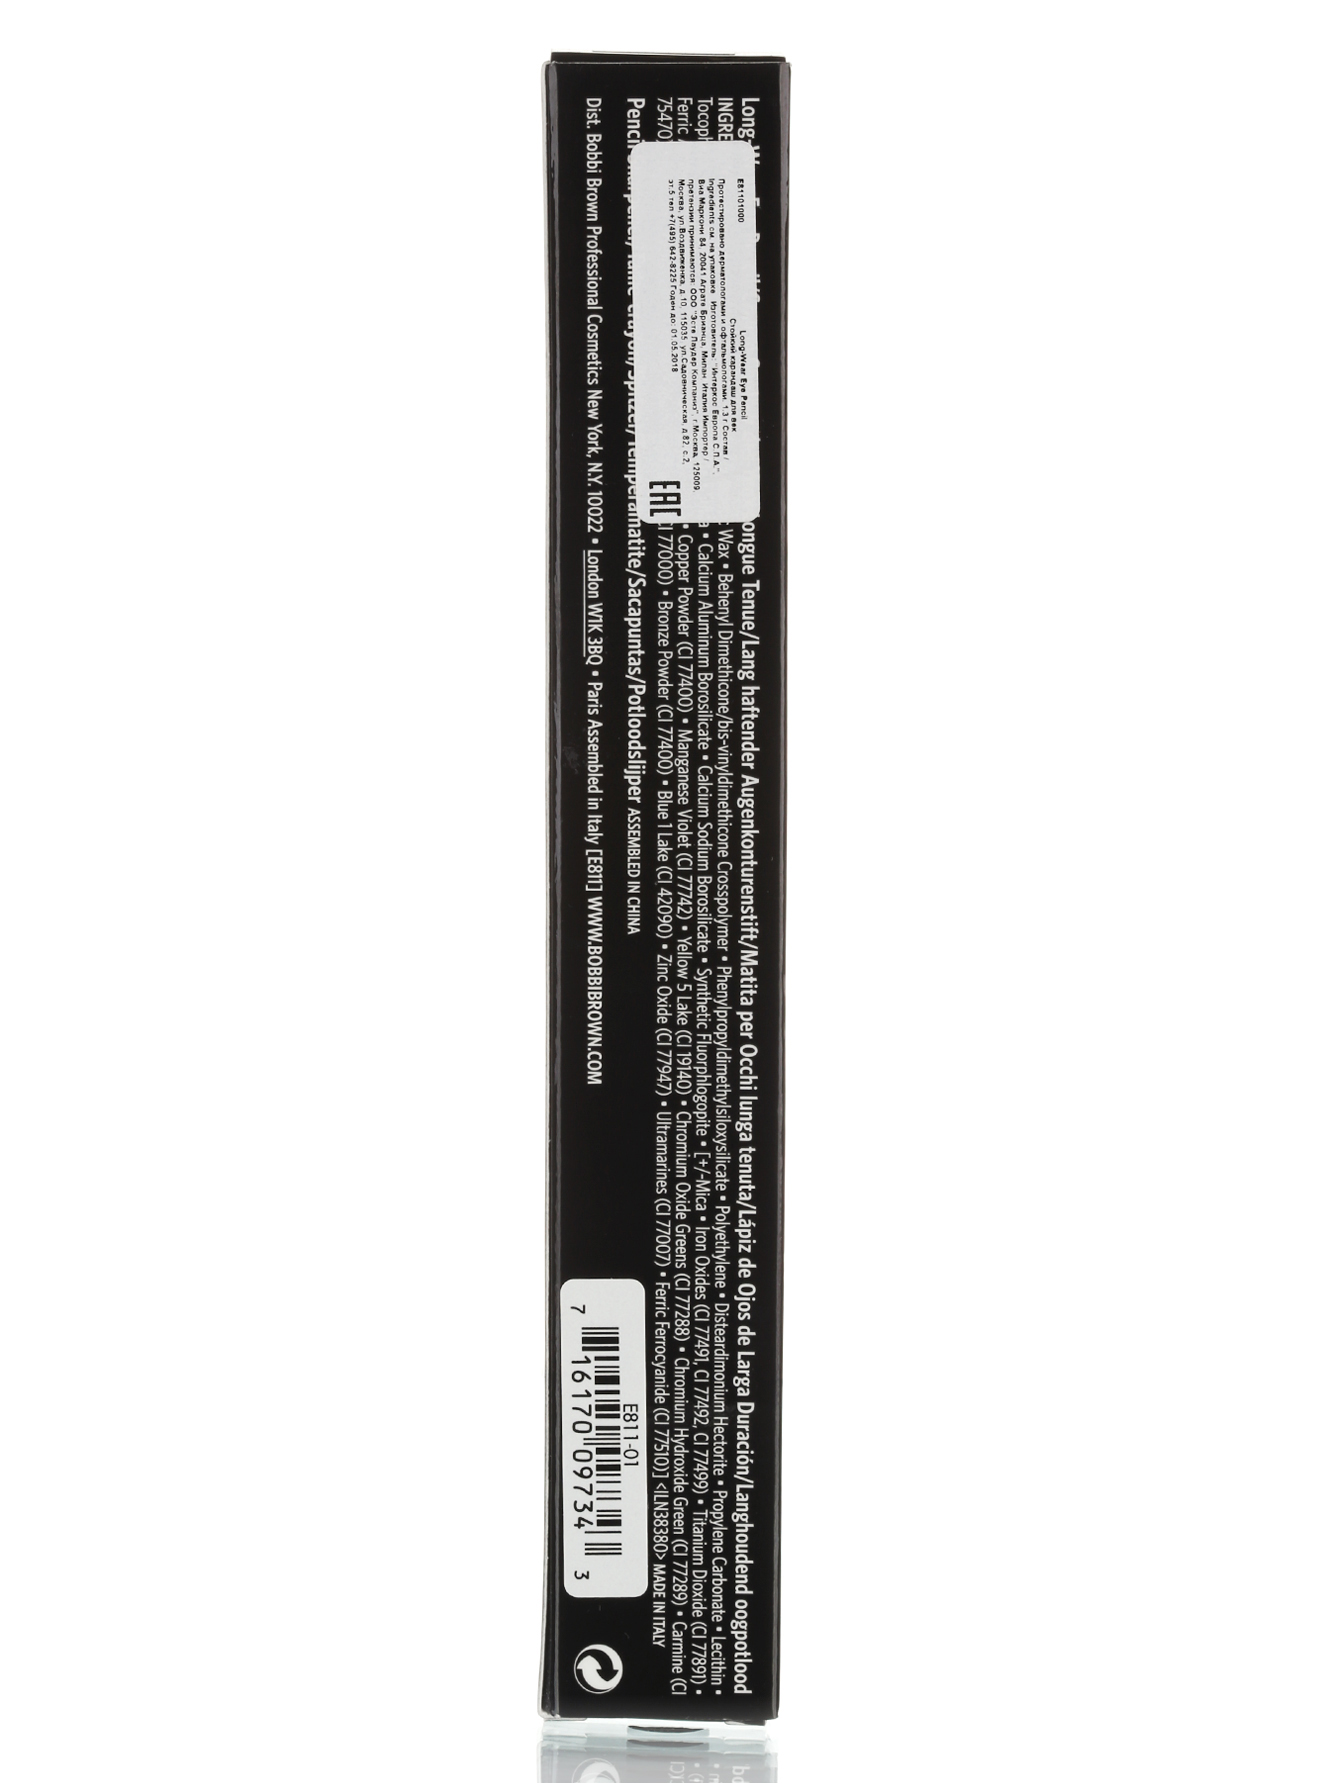  Карандаш для глаз - Black Plum, Long-Wear - Модель Верх-Низ